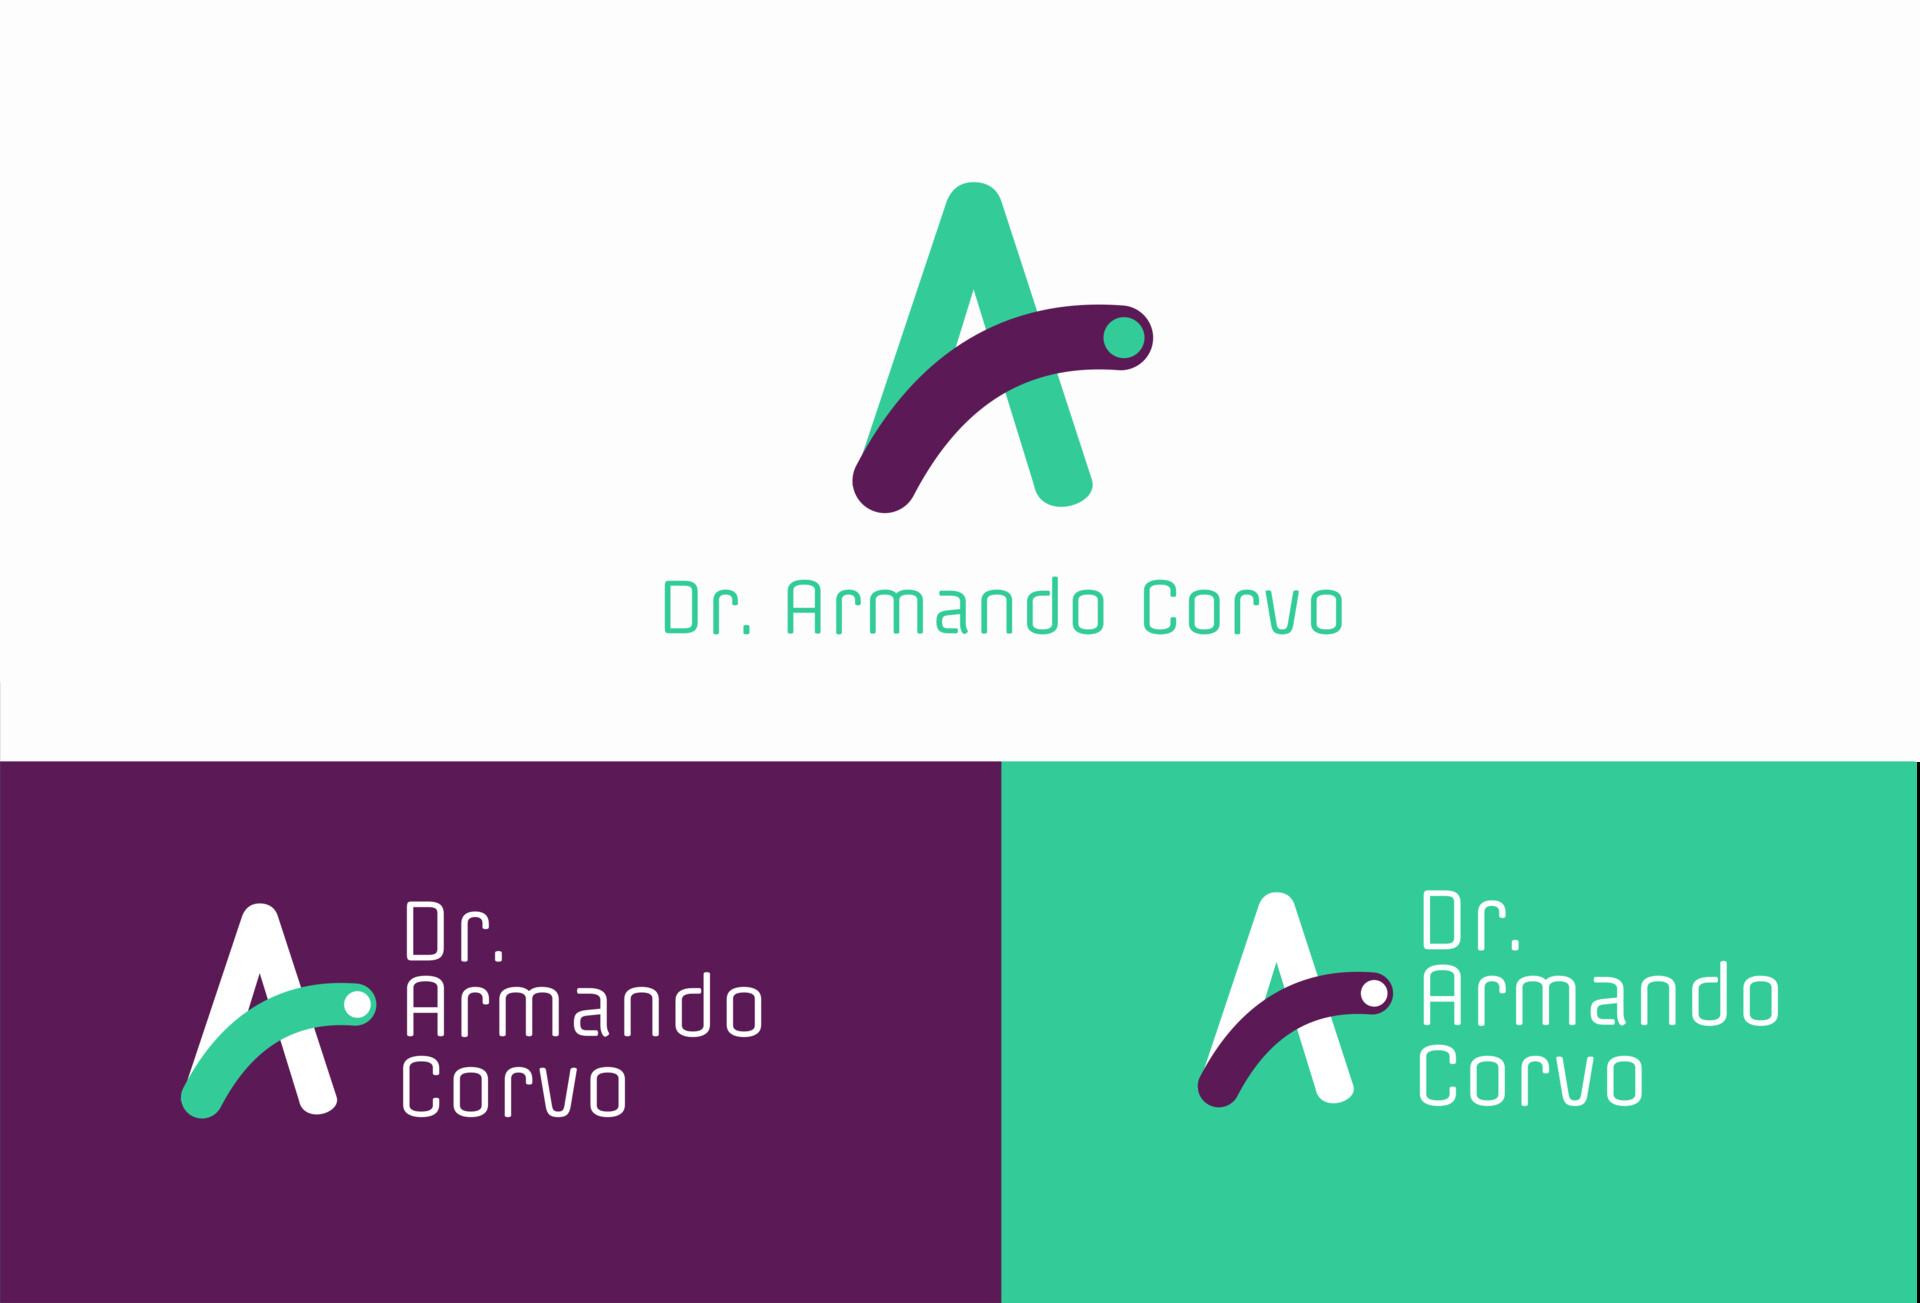 Dr. Armando Corvo